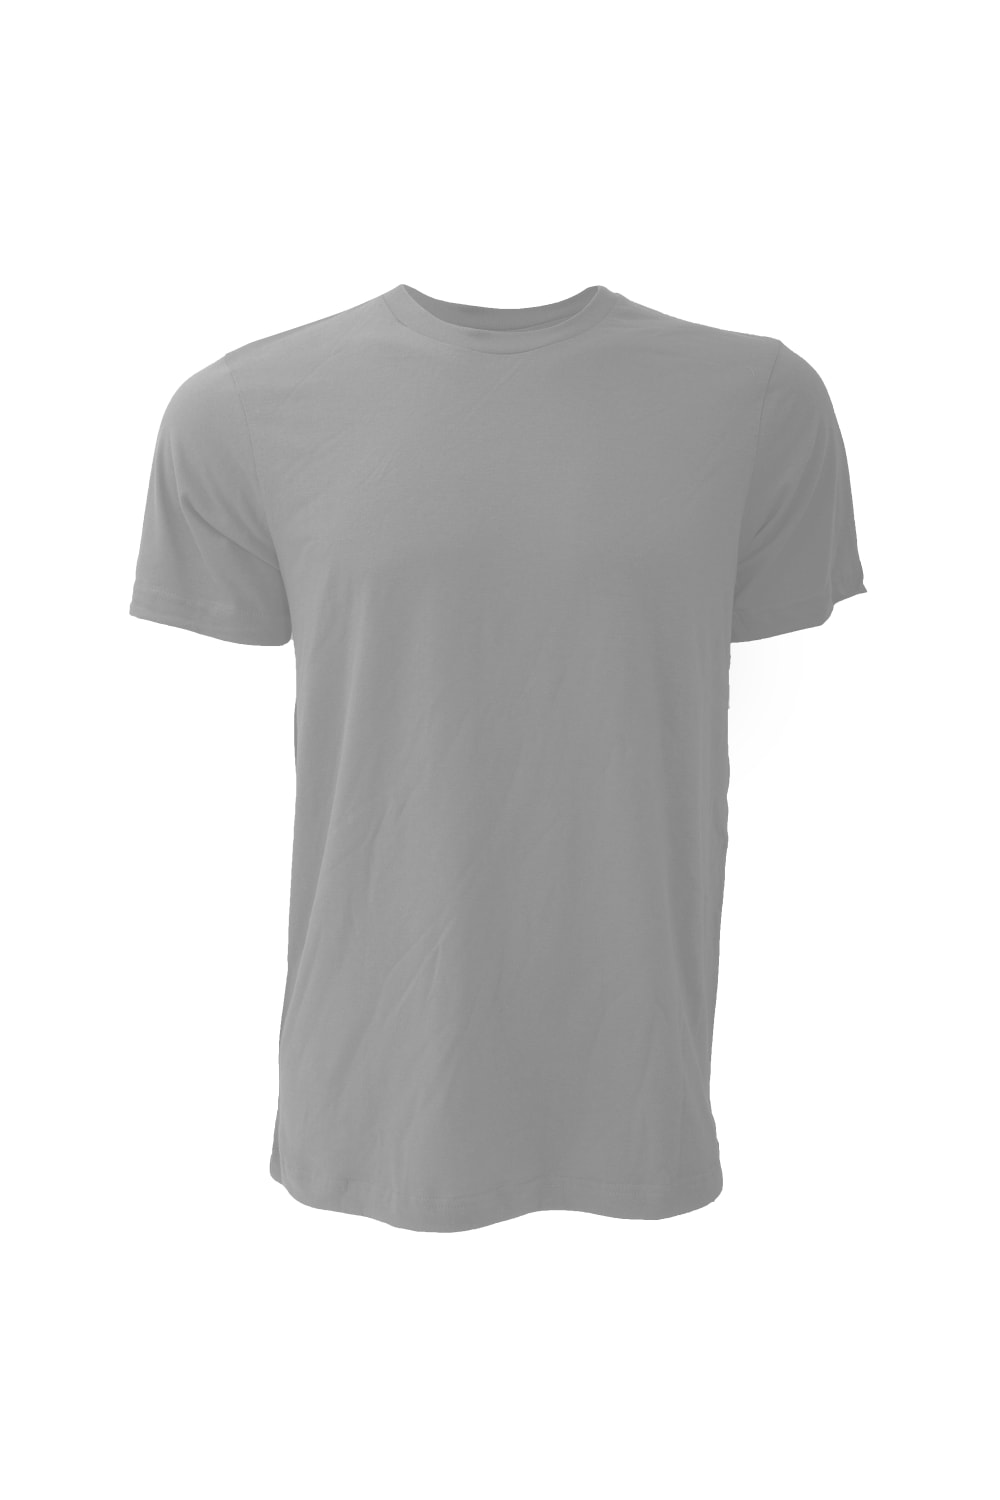 Unisex Jersey Crew Neck Short Sleeve T-Shirt - Athletic Heather